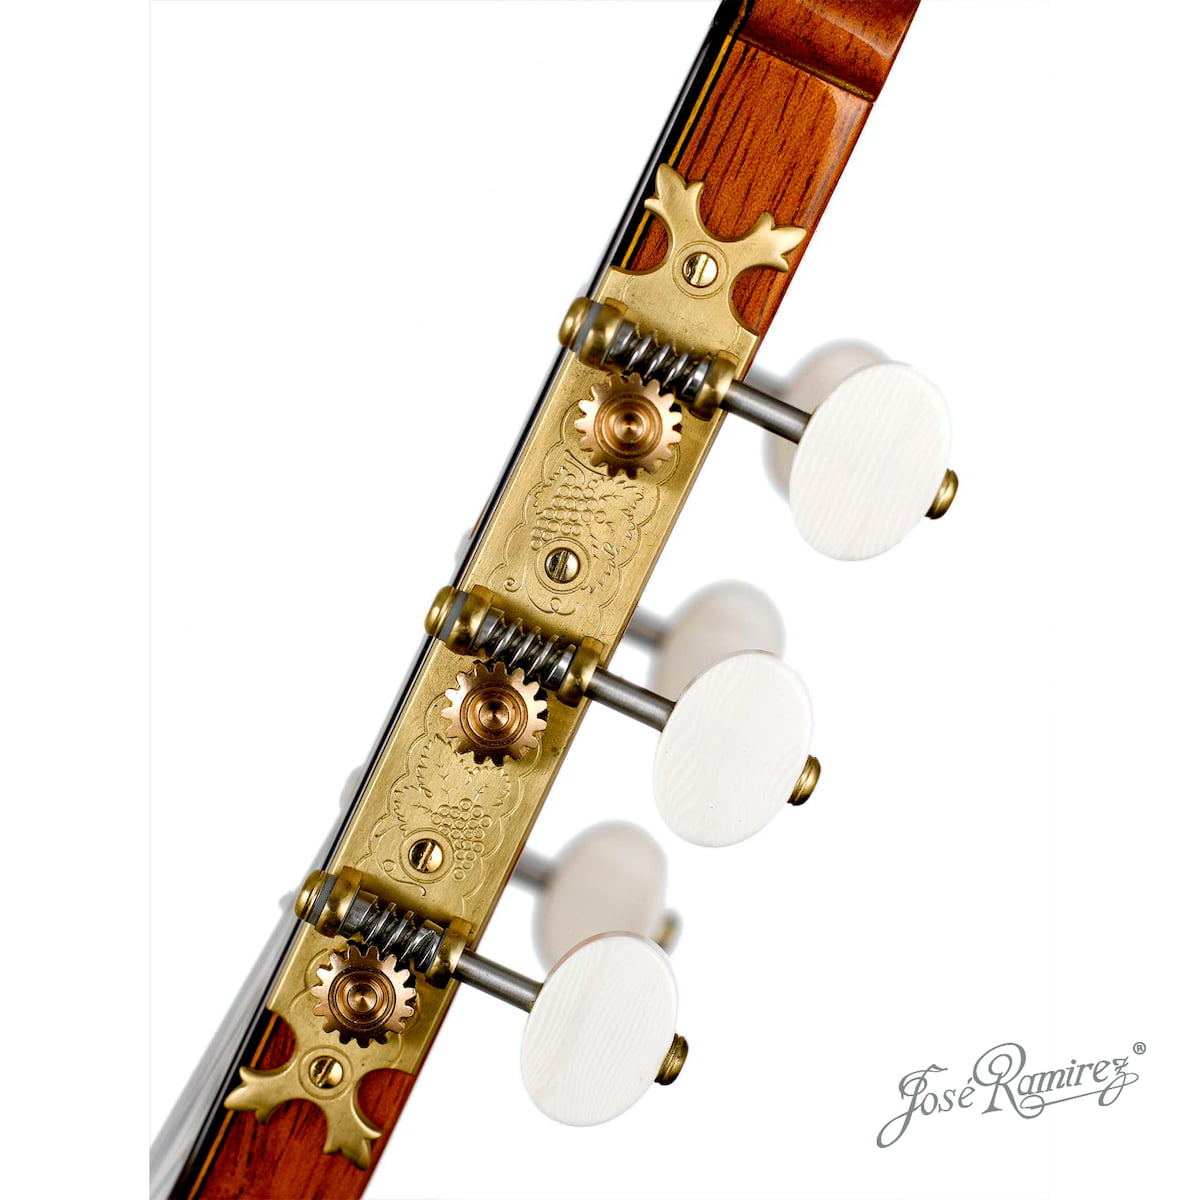 Headstock of the Traditional Wine handmade guitar.